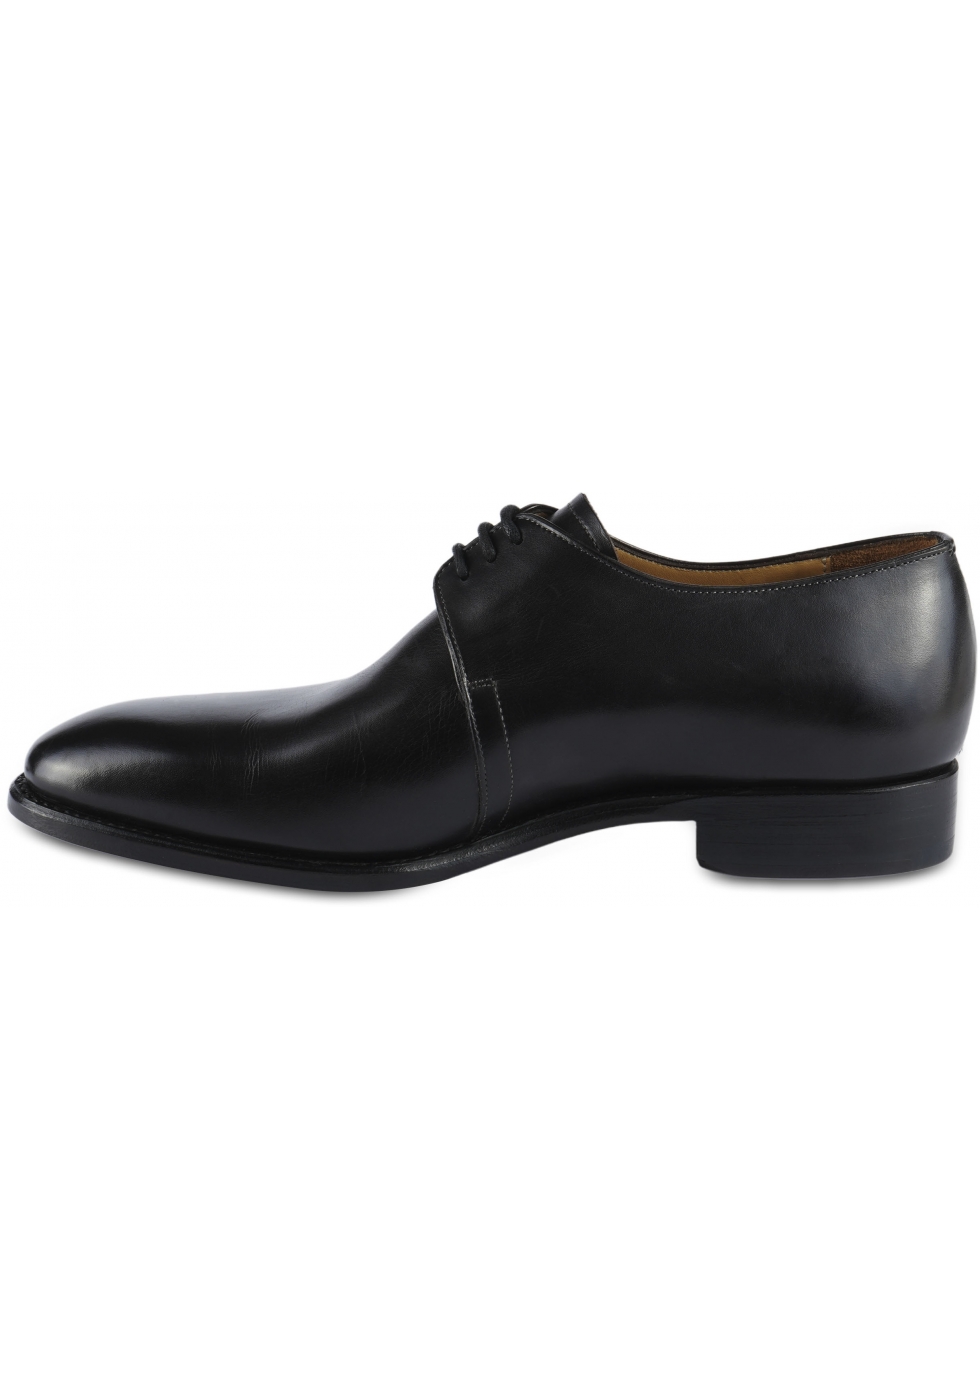 Carlos Santos Men's formal lace-ups derby shoes in black calf leather ...